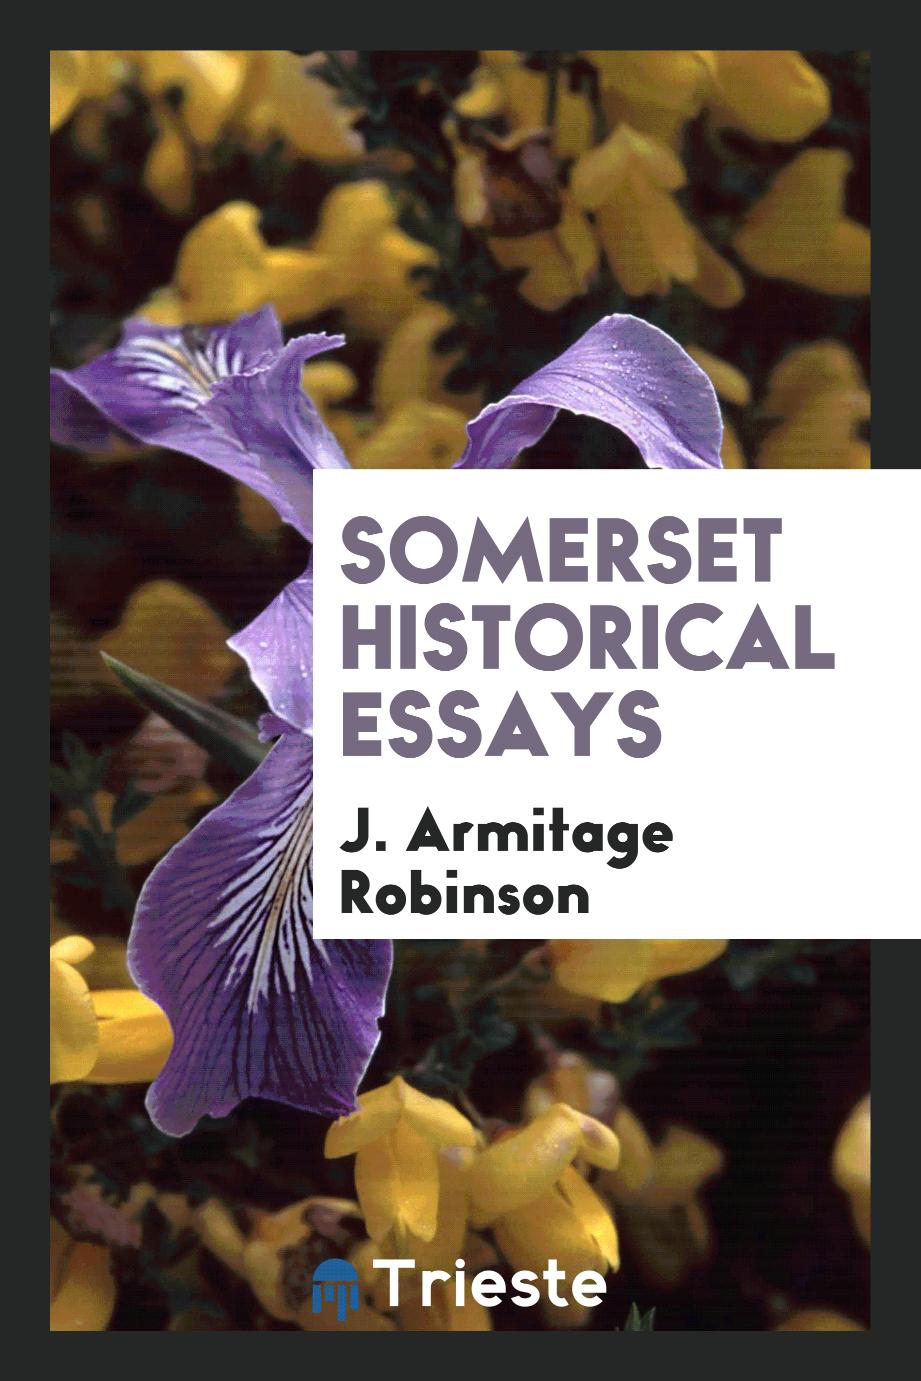 Somerset Historical Essays